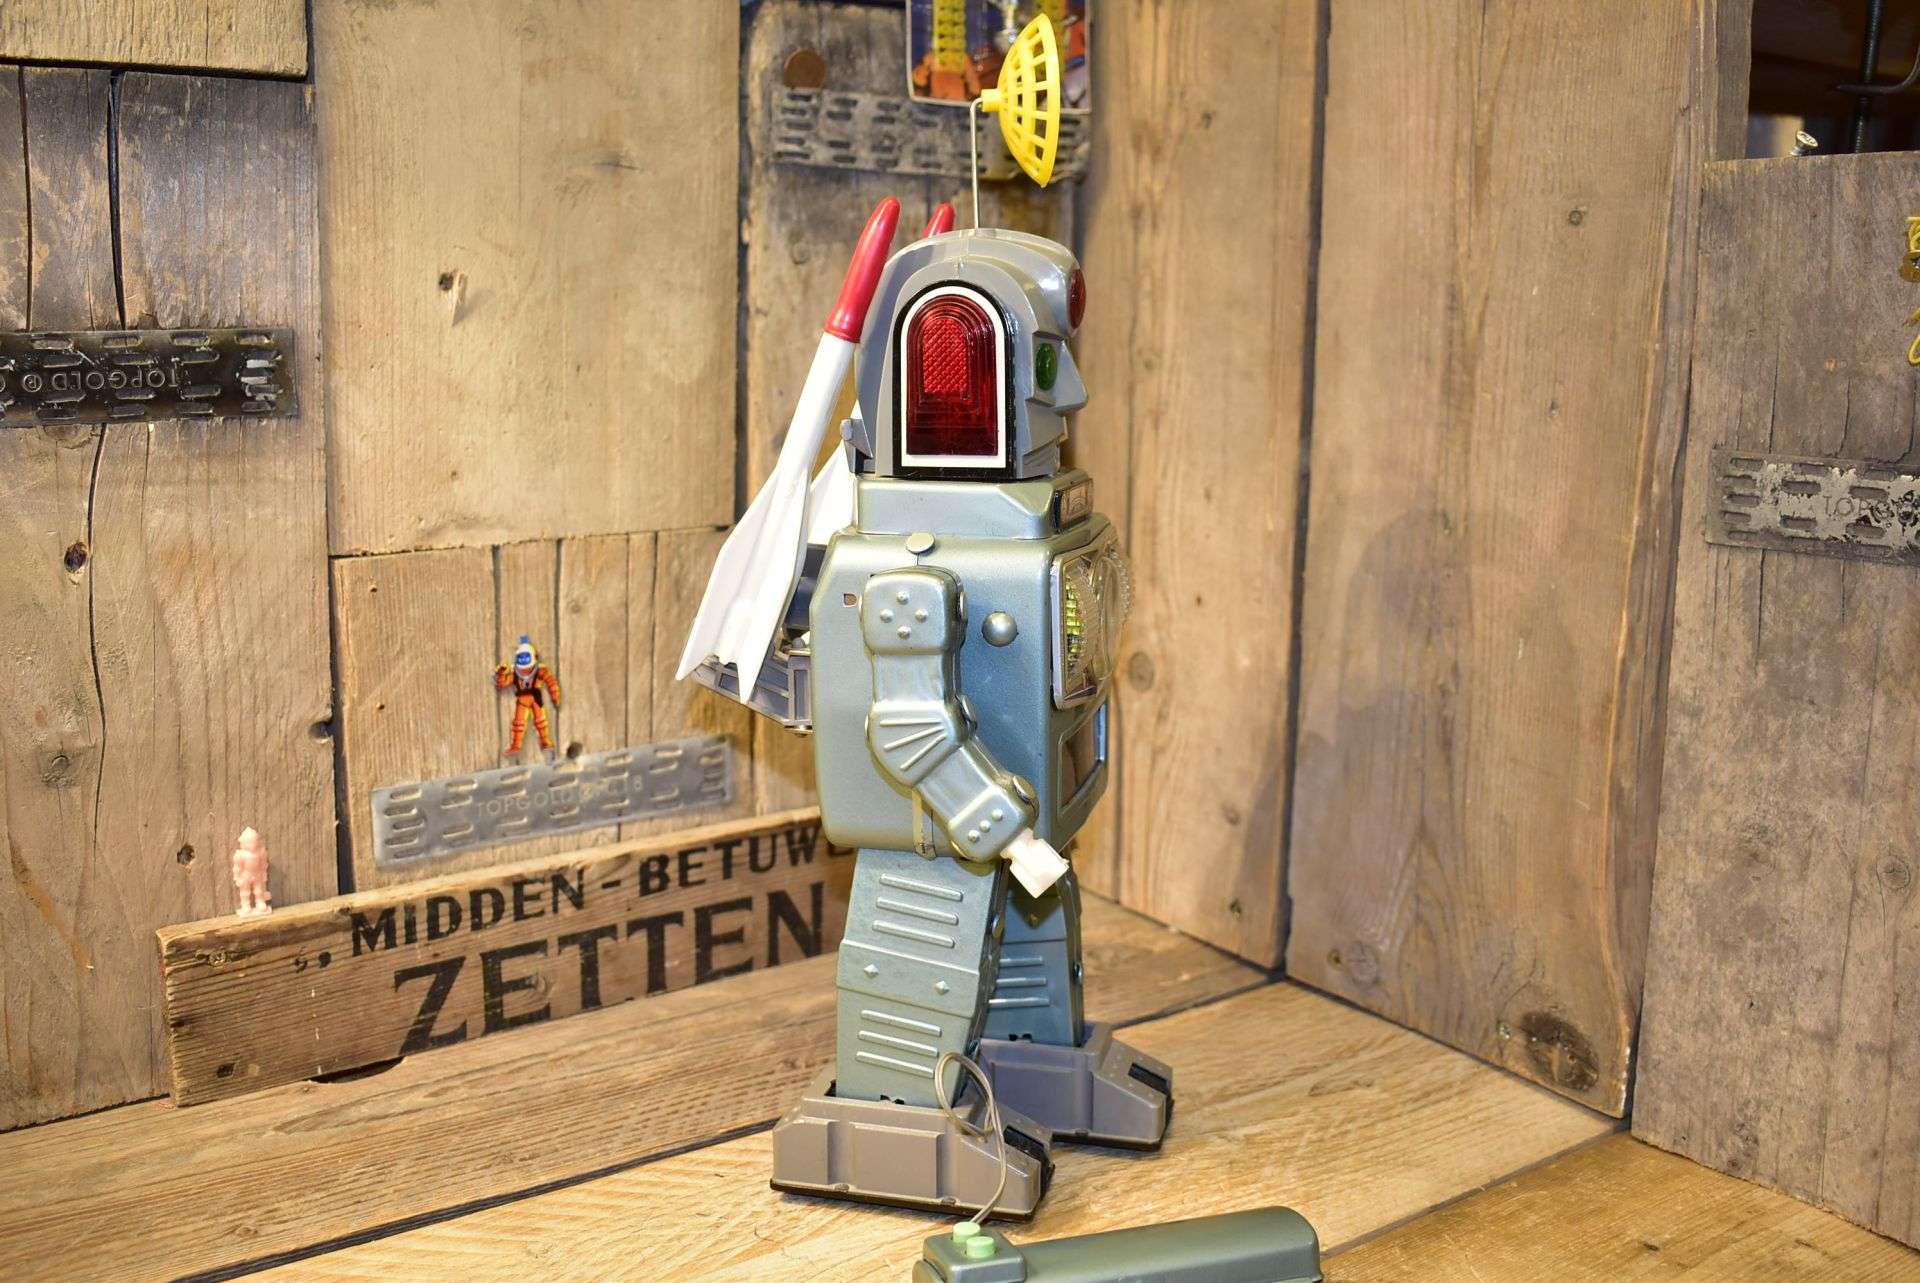 Alps - Rocketman in Space Armor